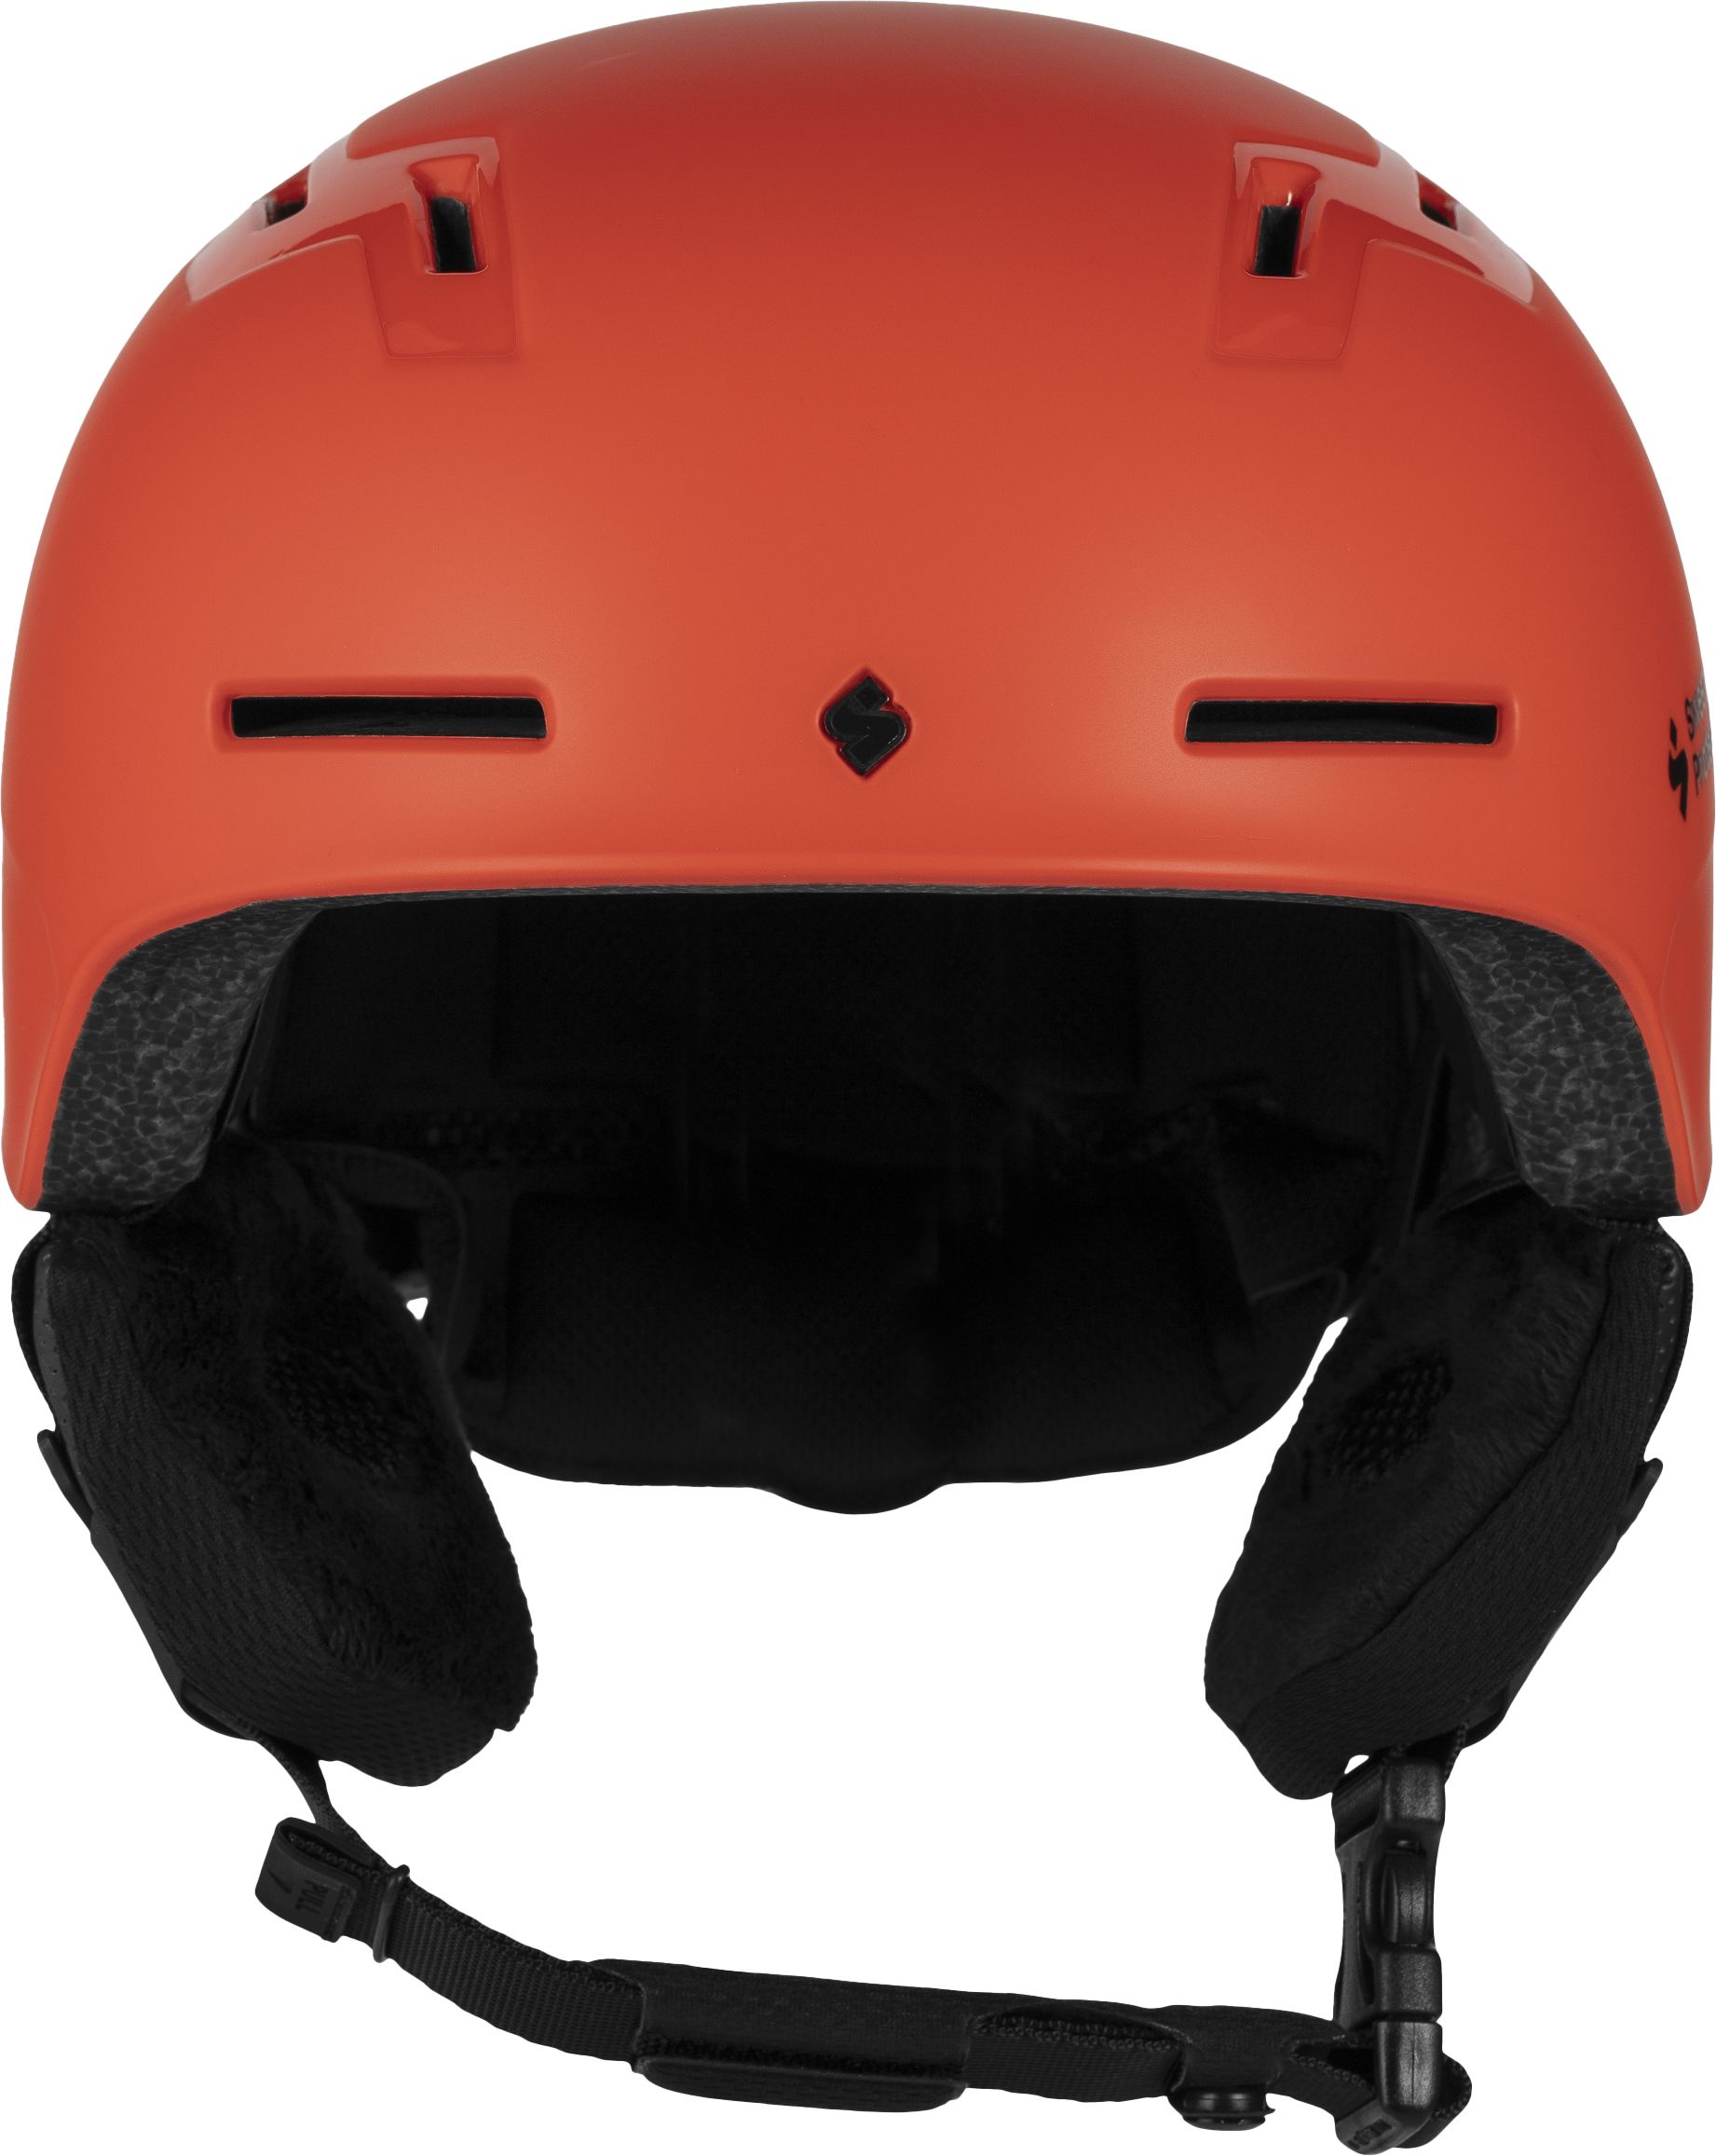 SWEET PROTECTION, Winder Mips Helmet